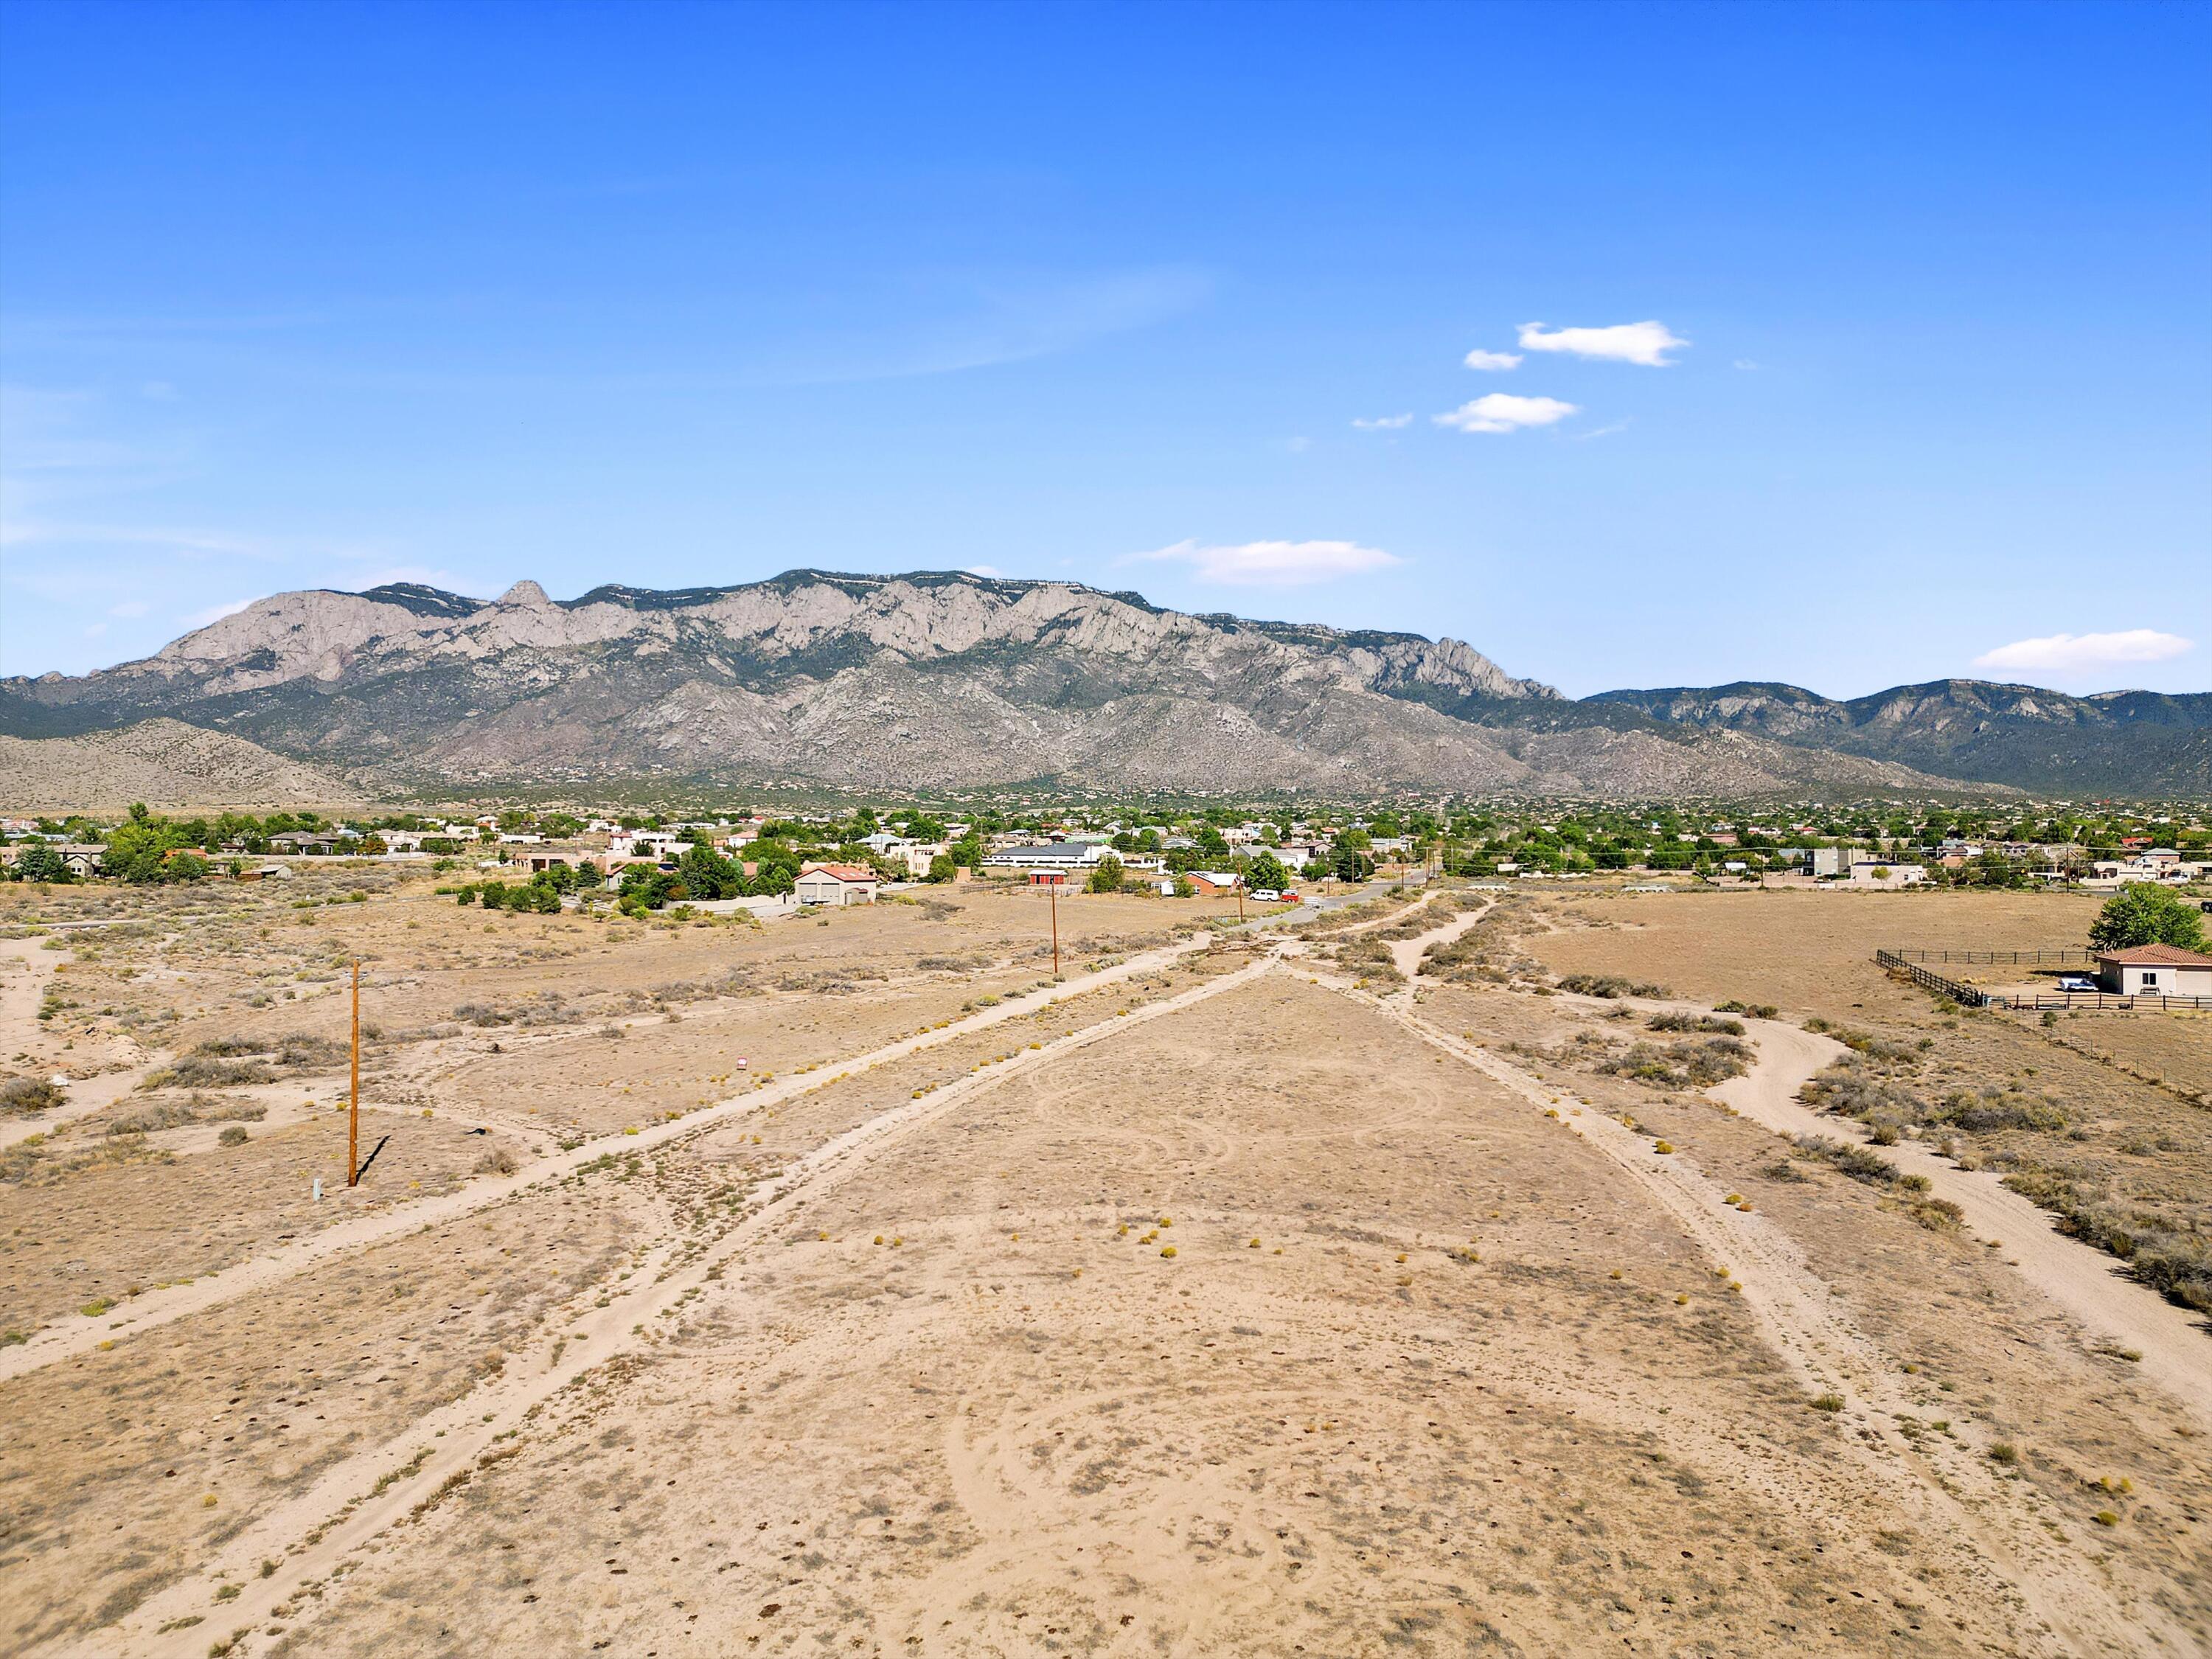 View Albuquerque, NM 87122 property